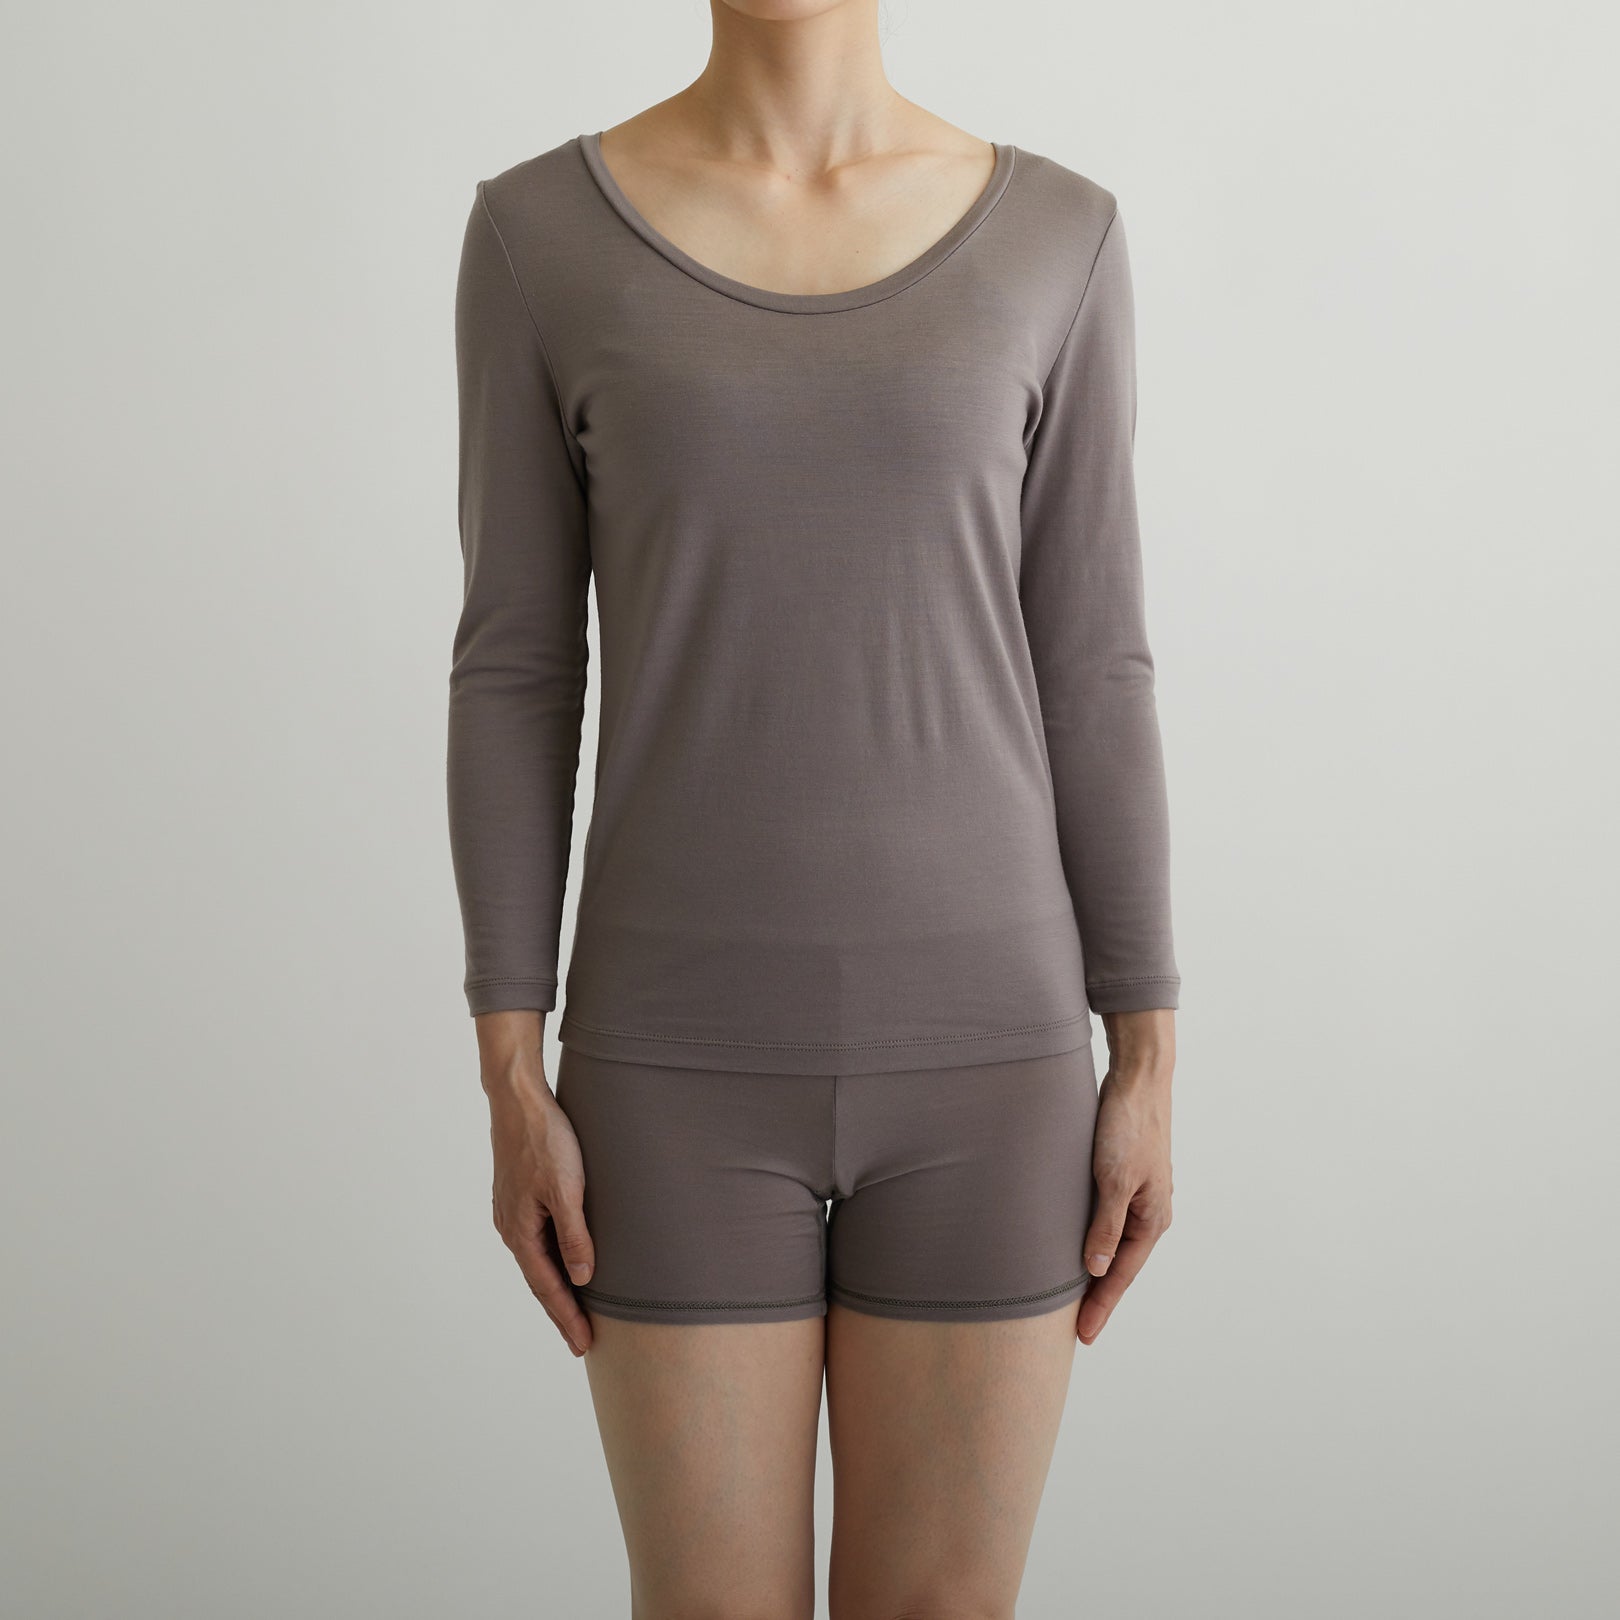 100% Merino Wool Jersey High Waist Shorts in Taupe (2022 model)